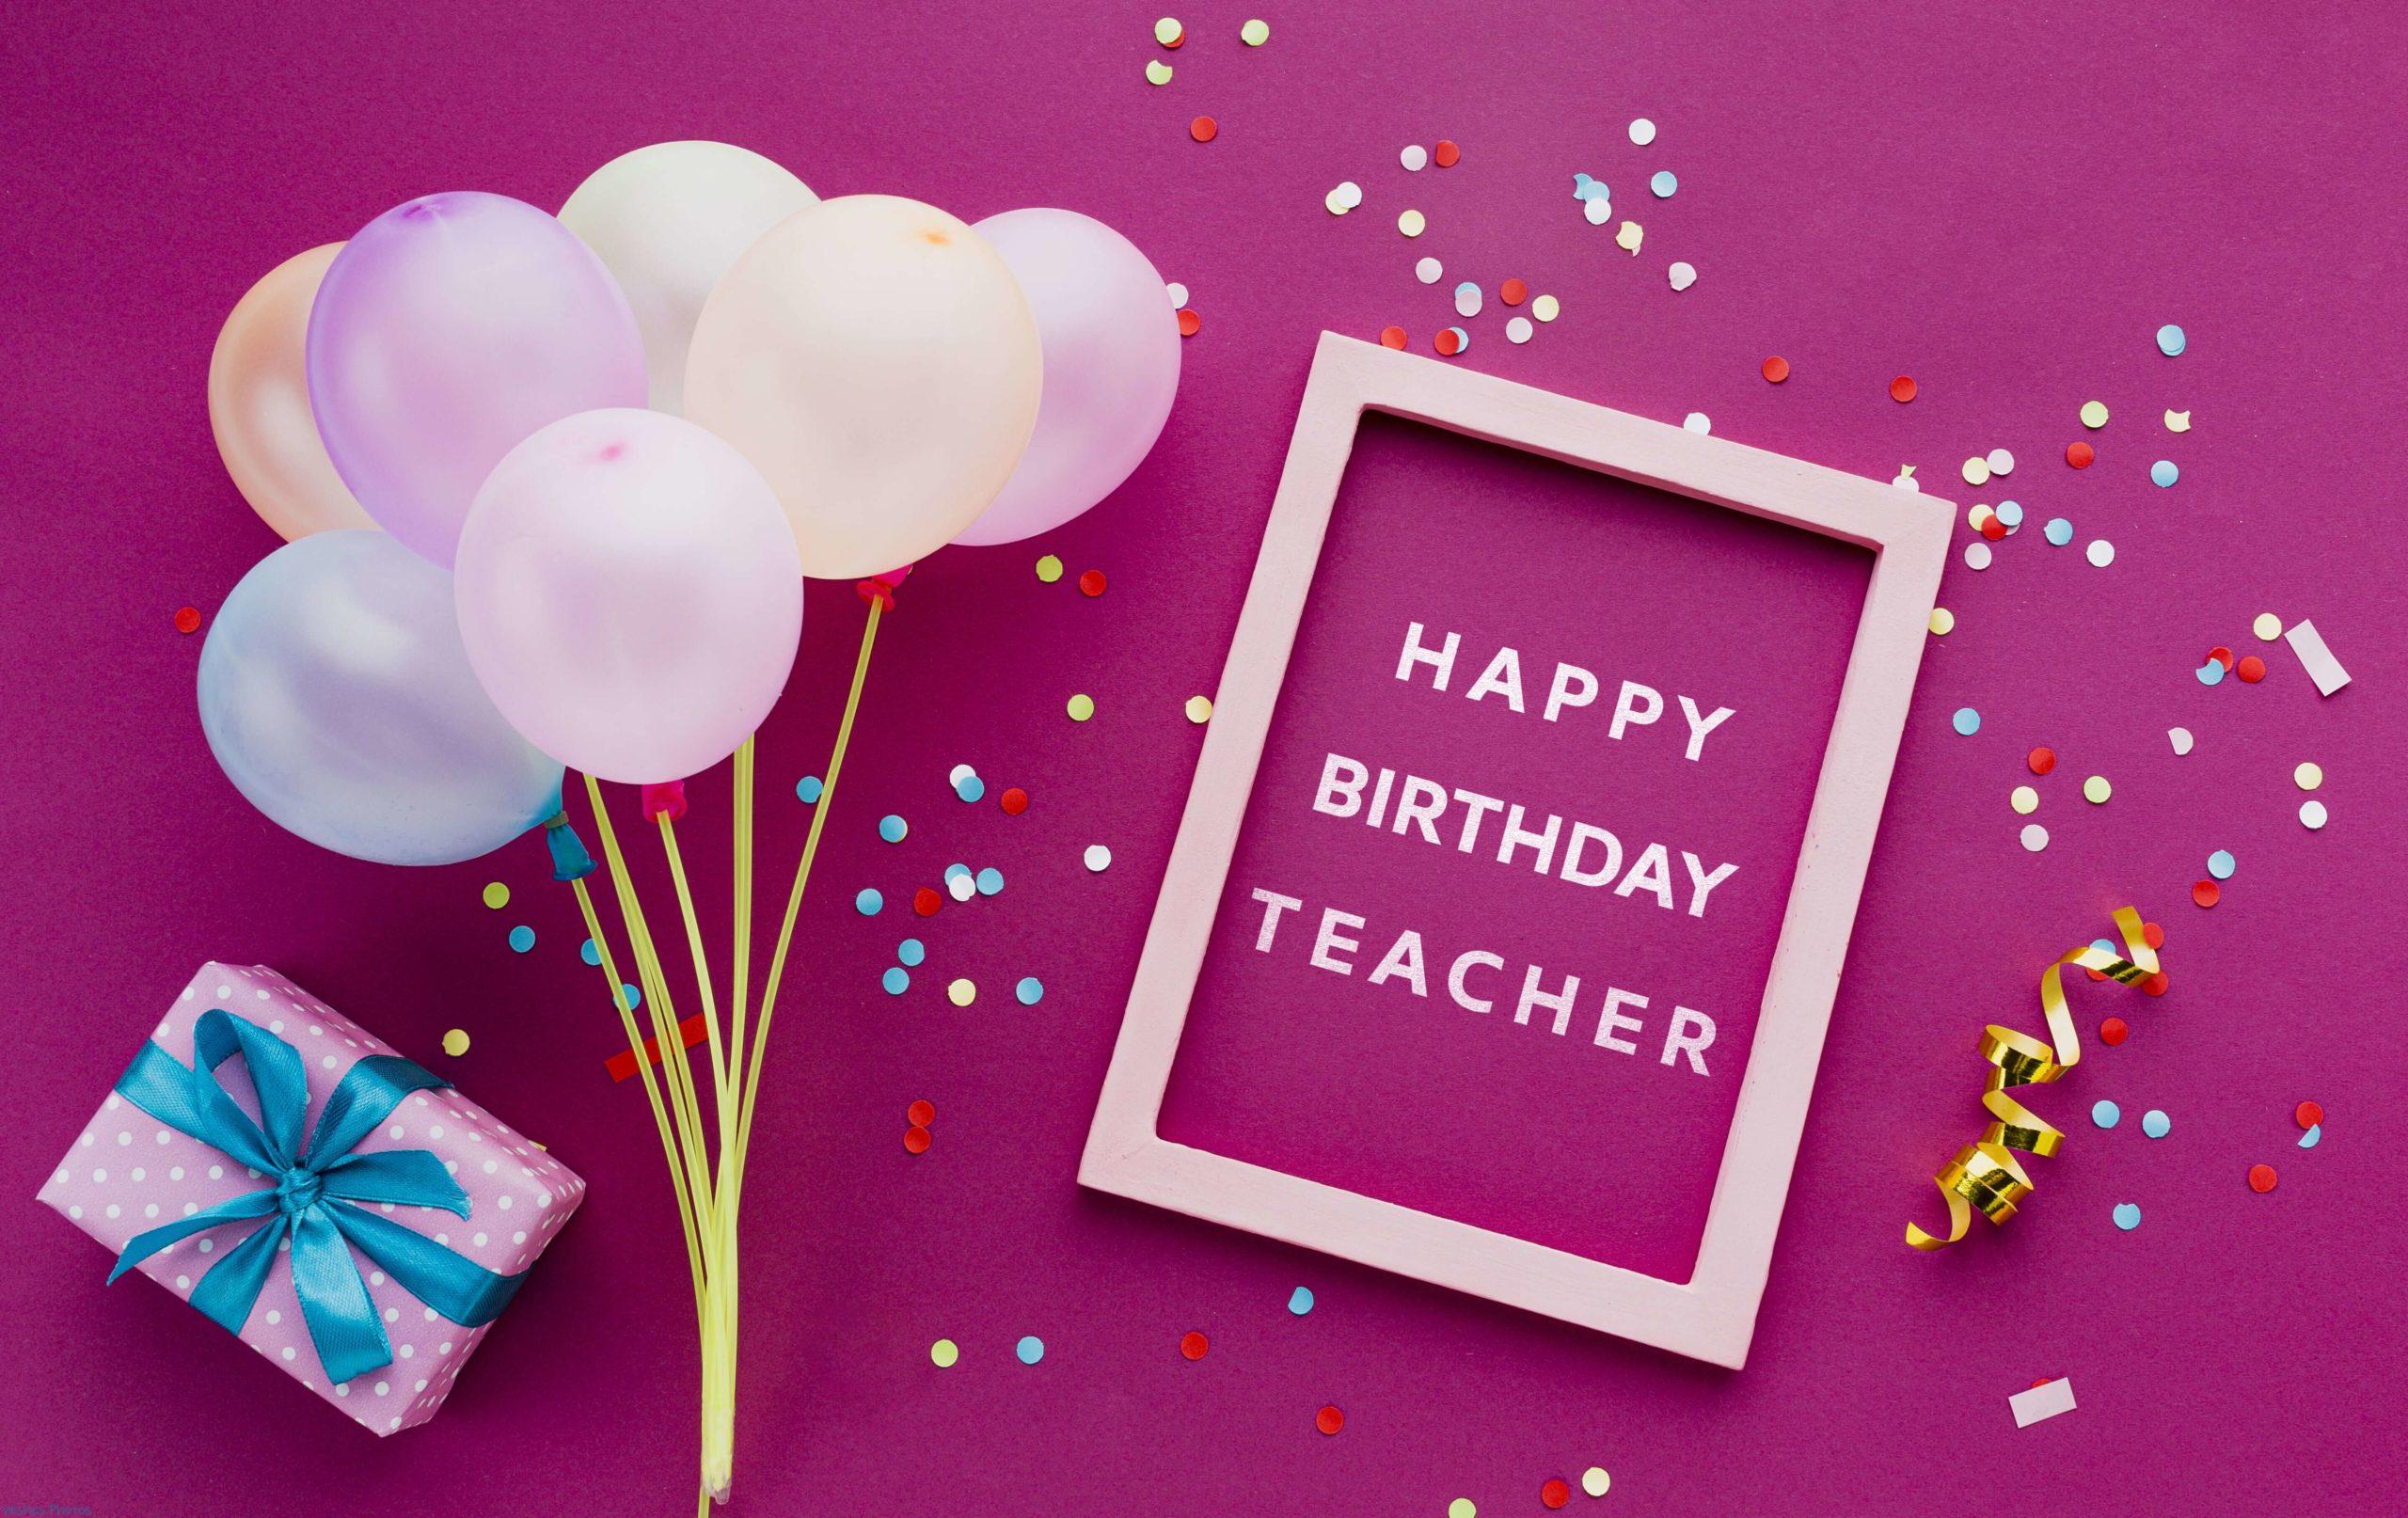 Happy Birthday Teacher Image Card